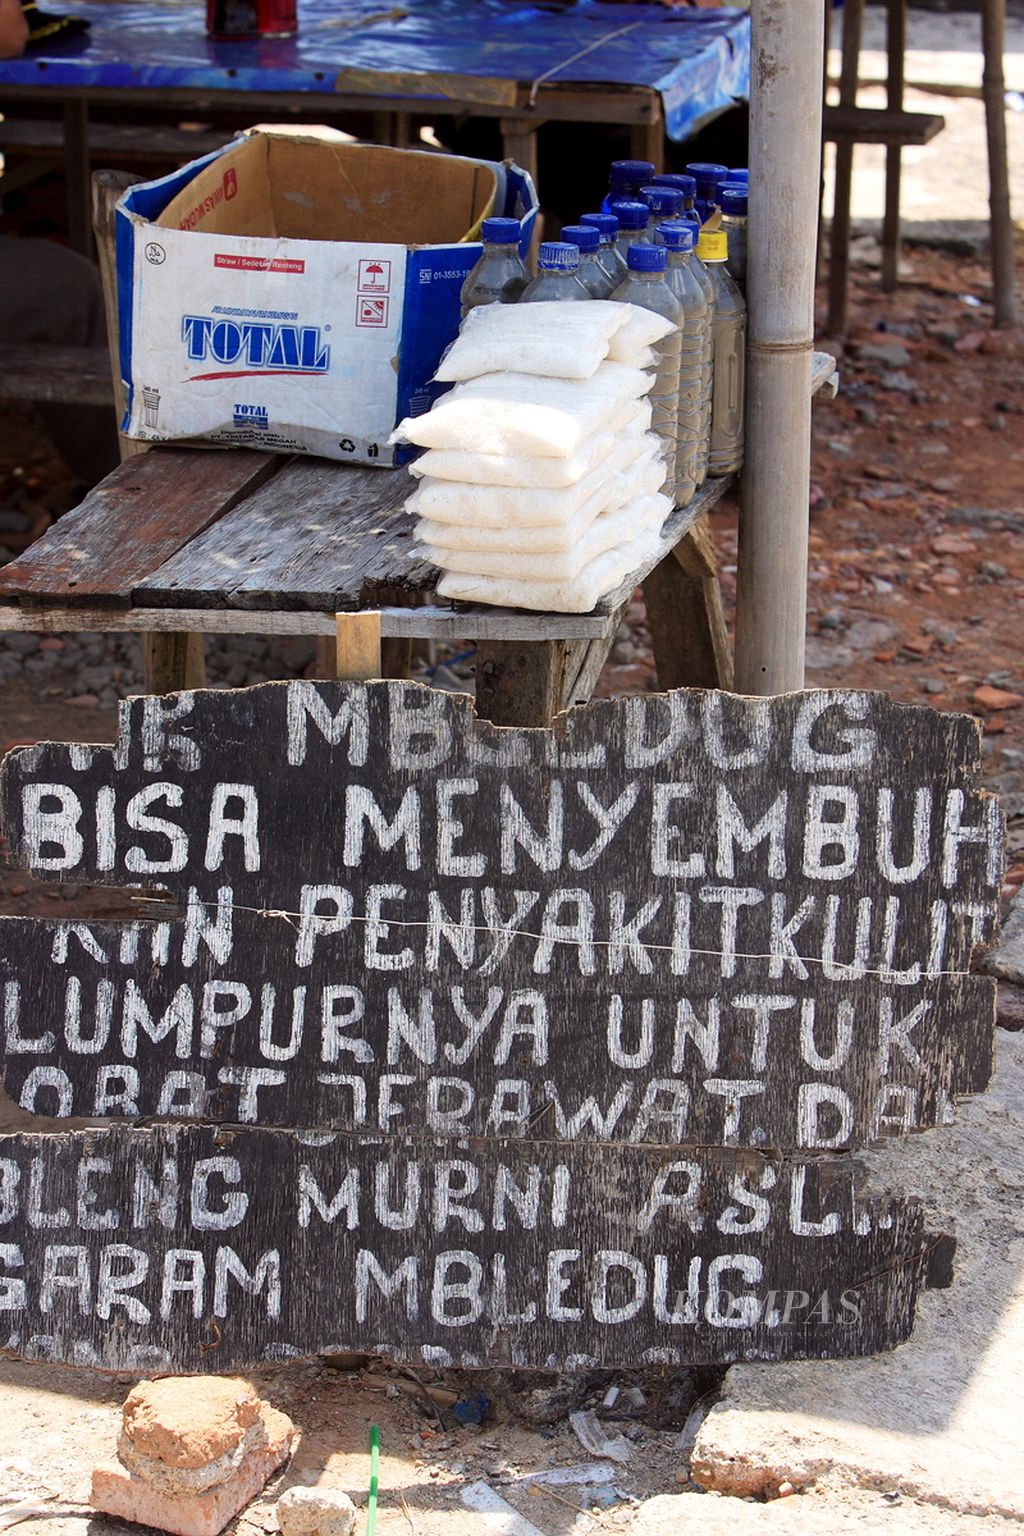  Garam dari Bledug Kuwu dijual sebagai bumbu masak dan obat.